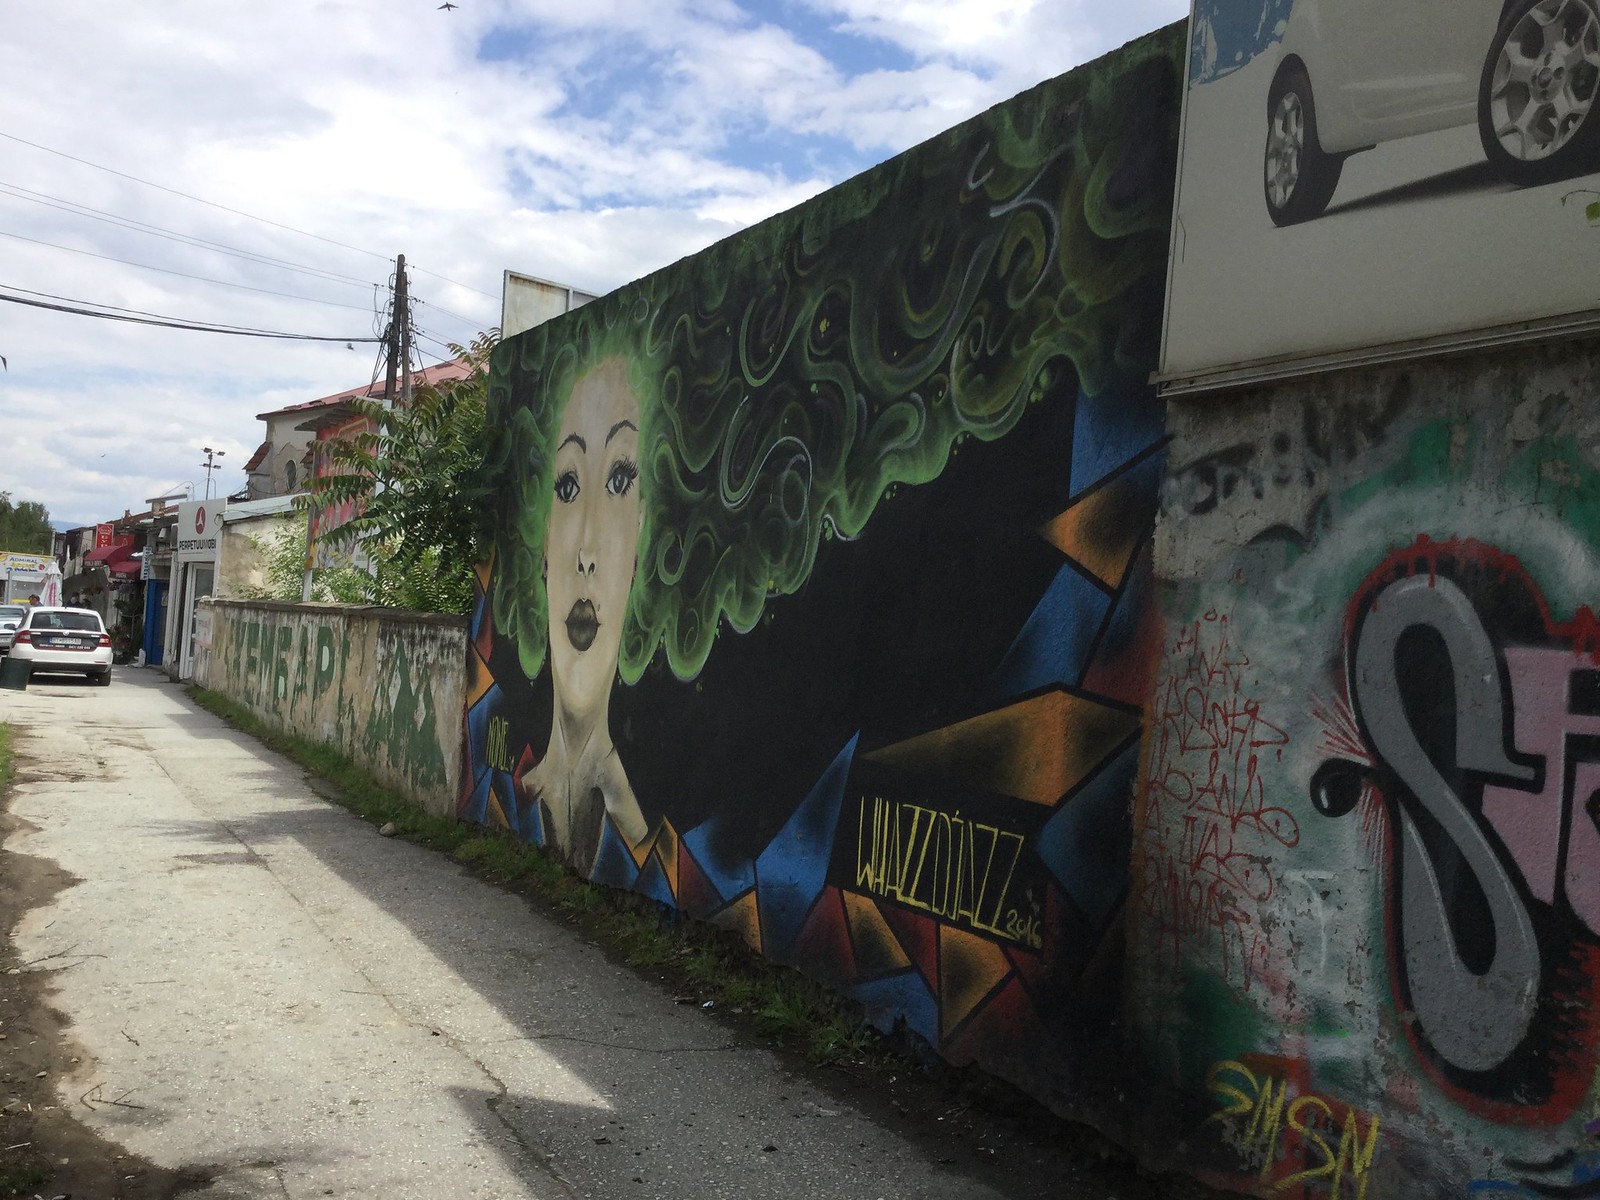 201705 - Balkans - Neon Woman Graffiti (full view) - 40 of 46 - Bitola, May 27, 2017